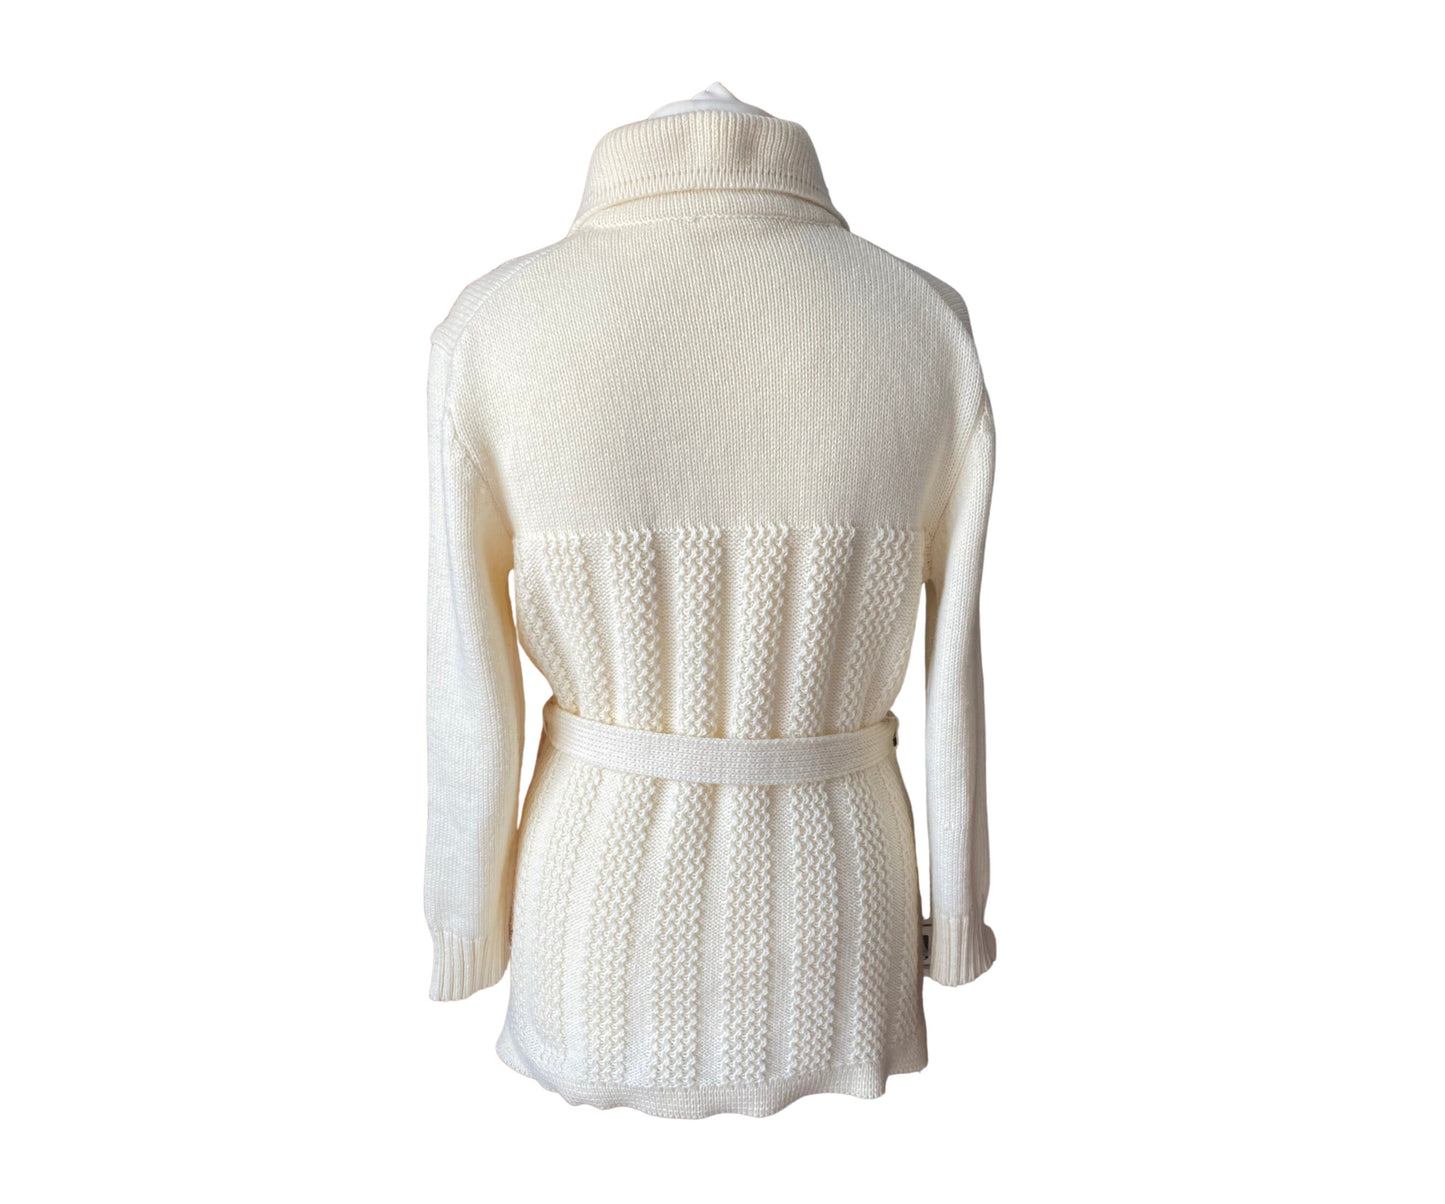 70s cream, shawl collar belted wool/ acrylic cardigan. Approx UK size 12 -16.